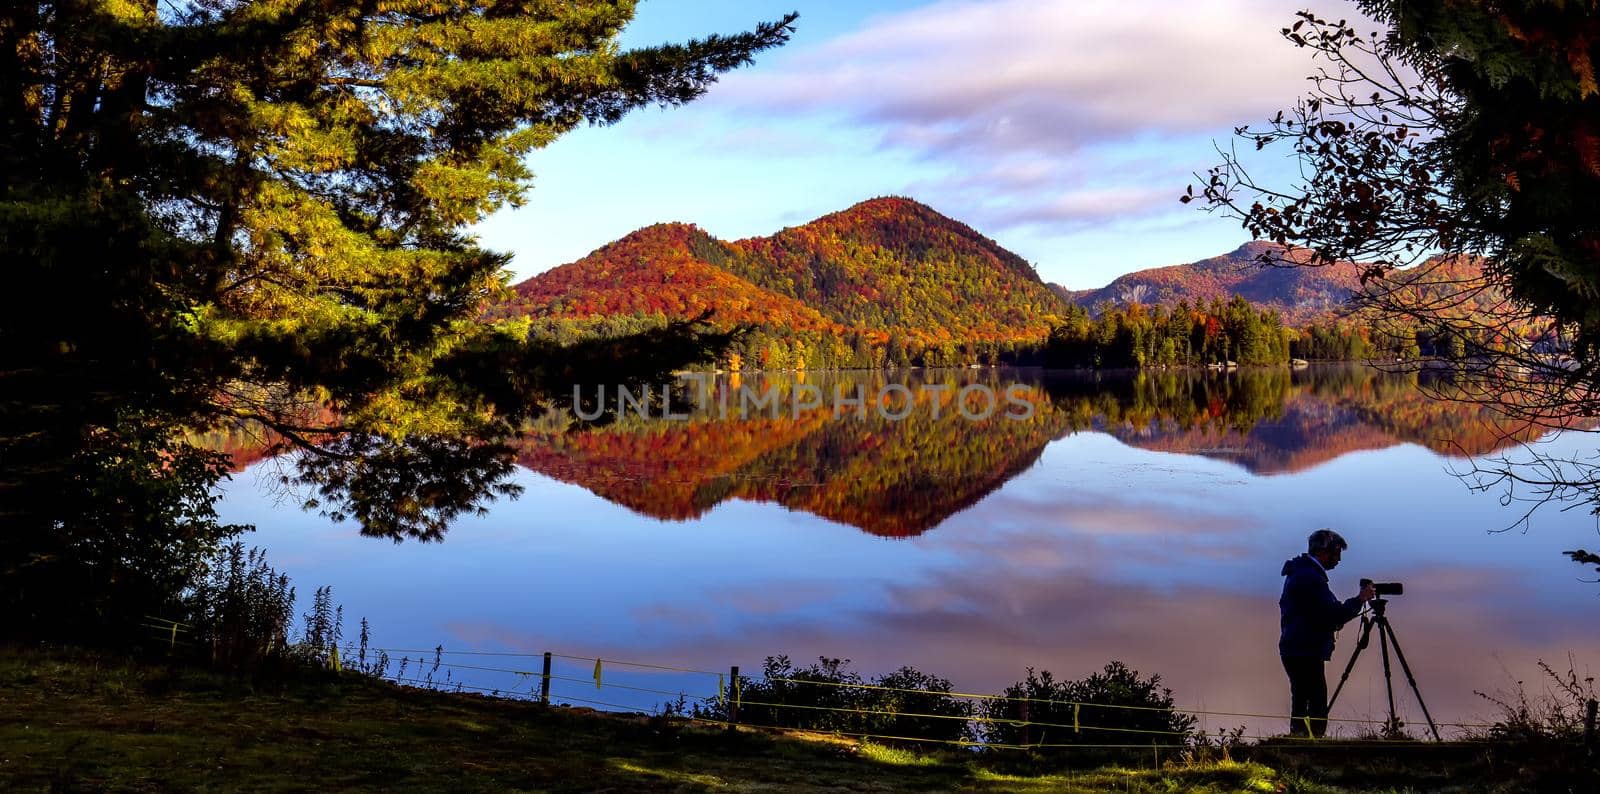 Lac-Superieur, Mont-tremblant, Quebec, Canada by photogolfer